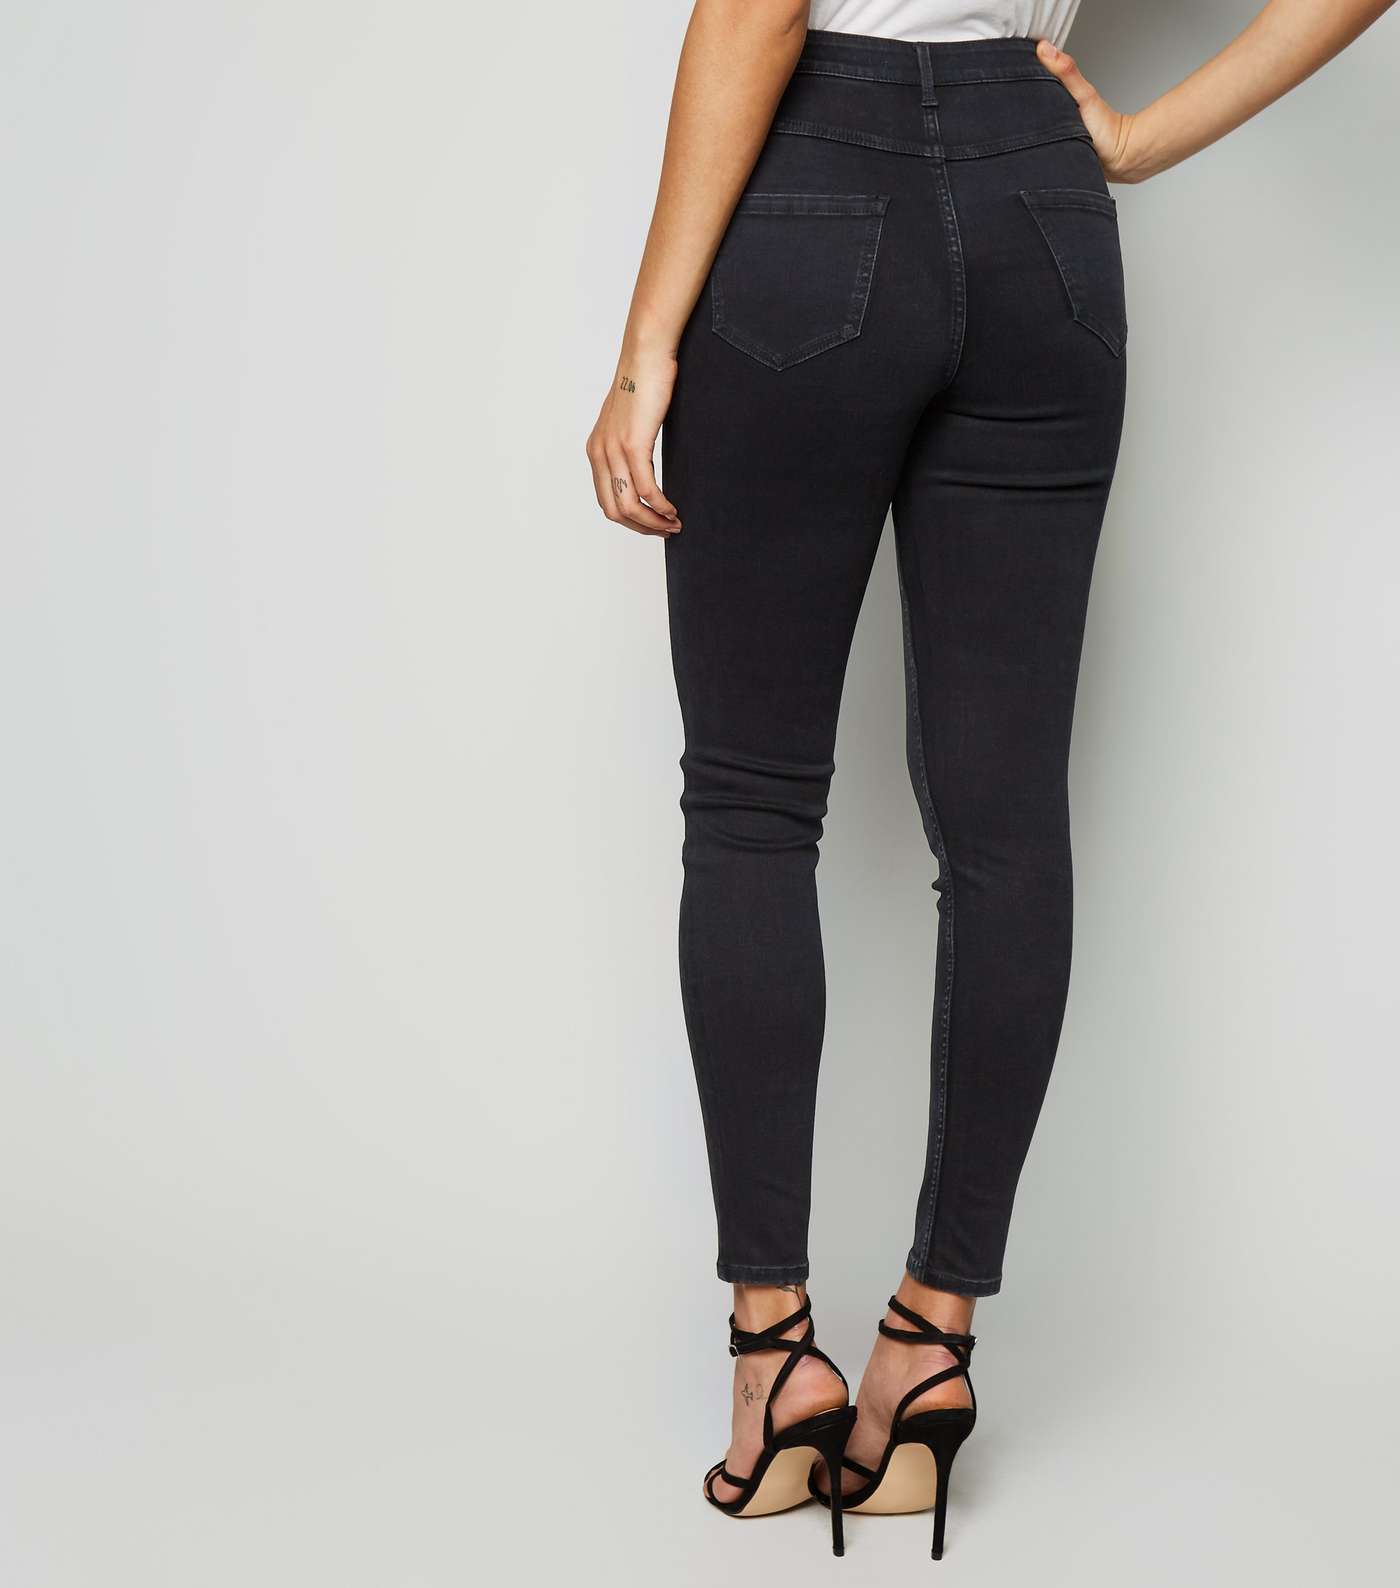 Black 'Lift & Shape' Jenna Skinny Jeans Image 3